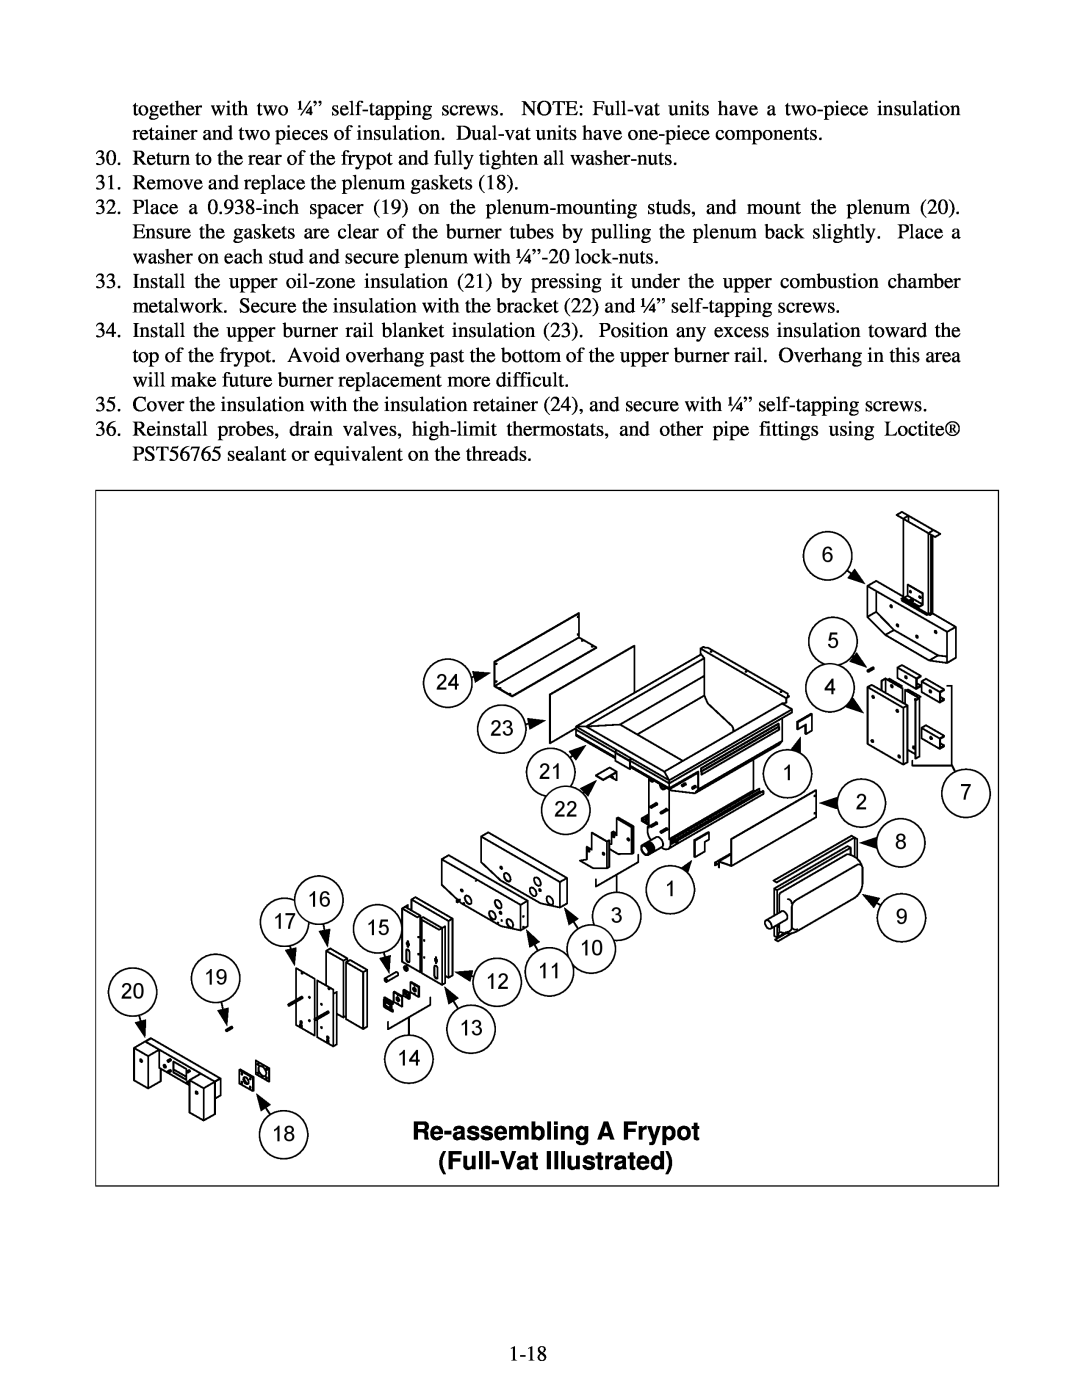 Frymaster 8196345 manual Re-assemblingA Frypot, Full-VatIllustrated 